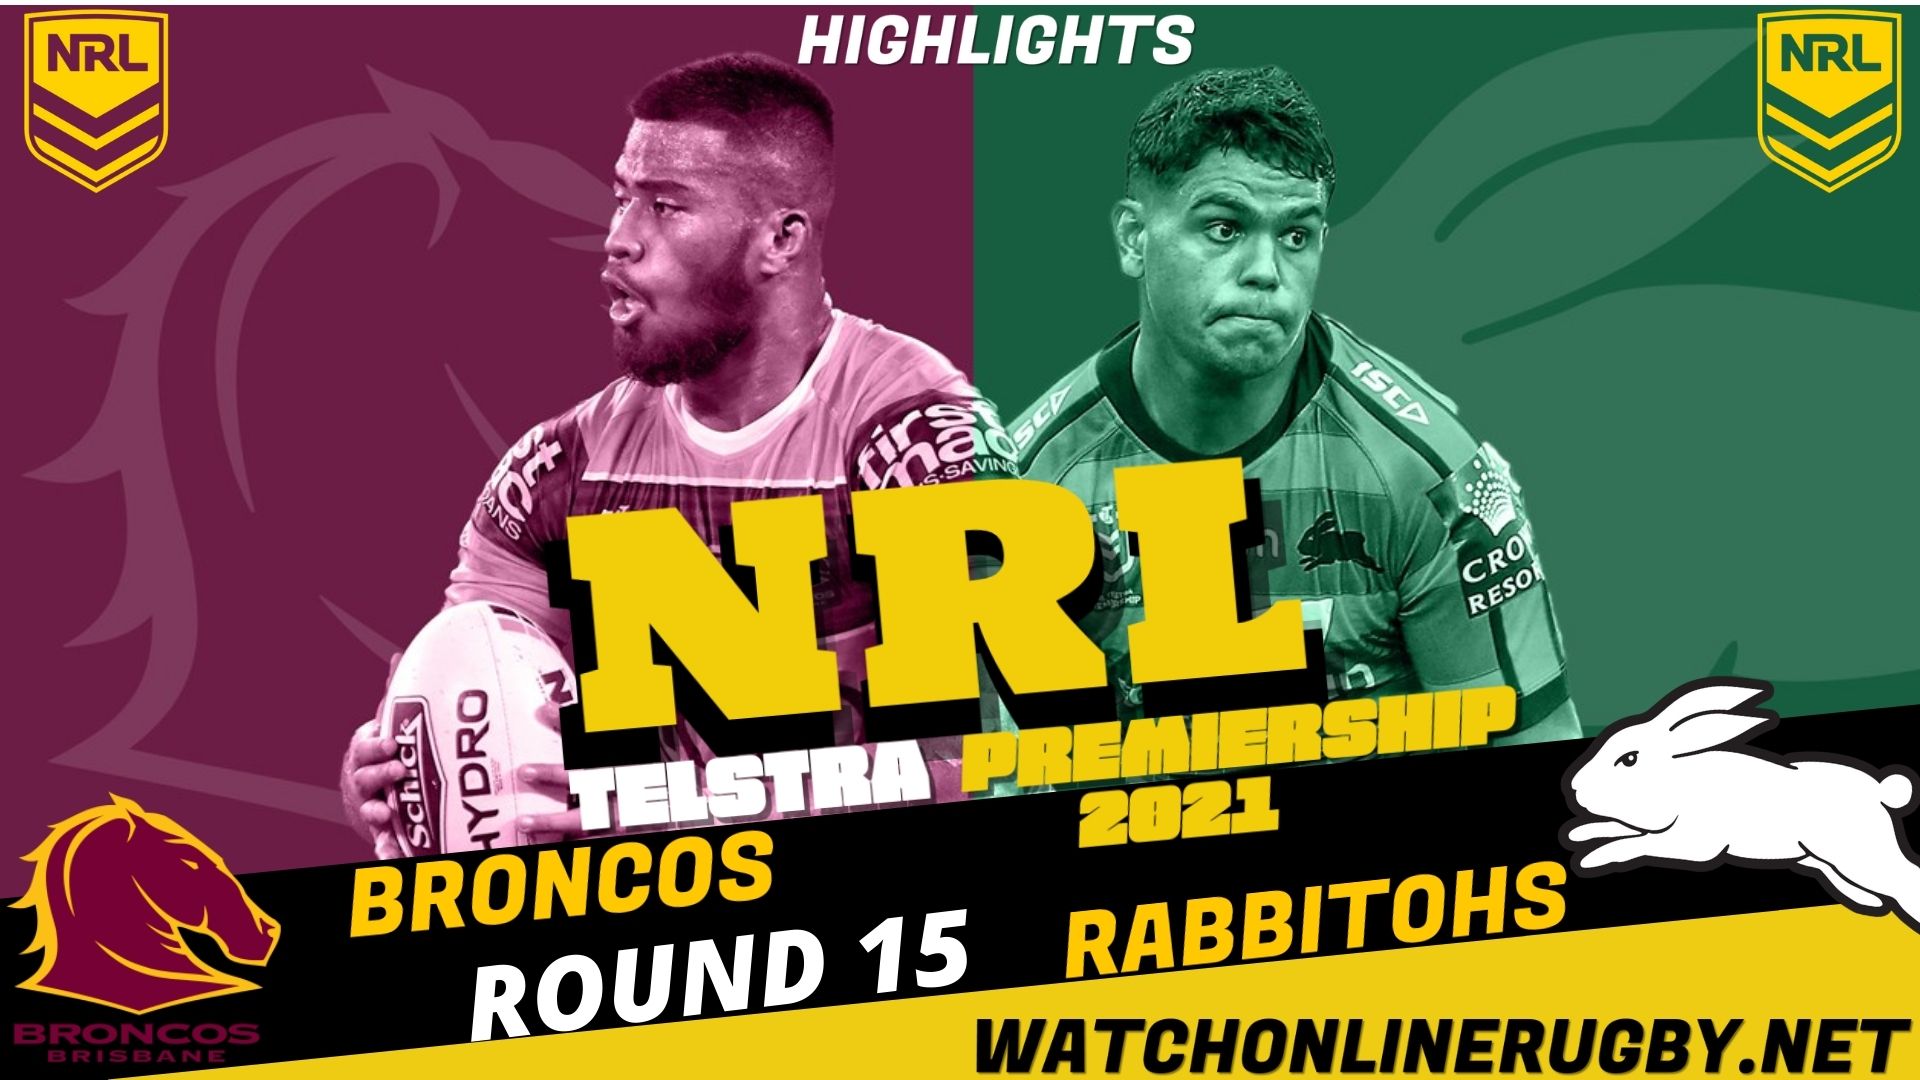 Broncos Vs Rabbitohs Highlights RD 15 NRL Rugby